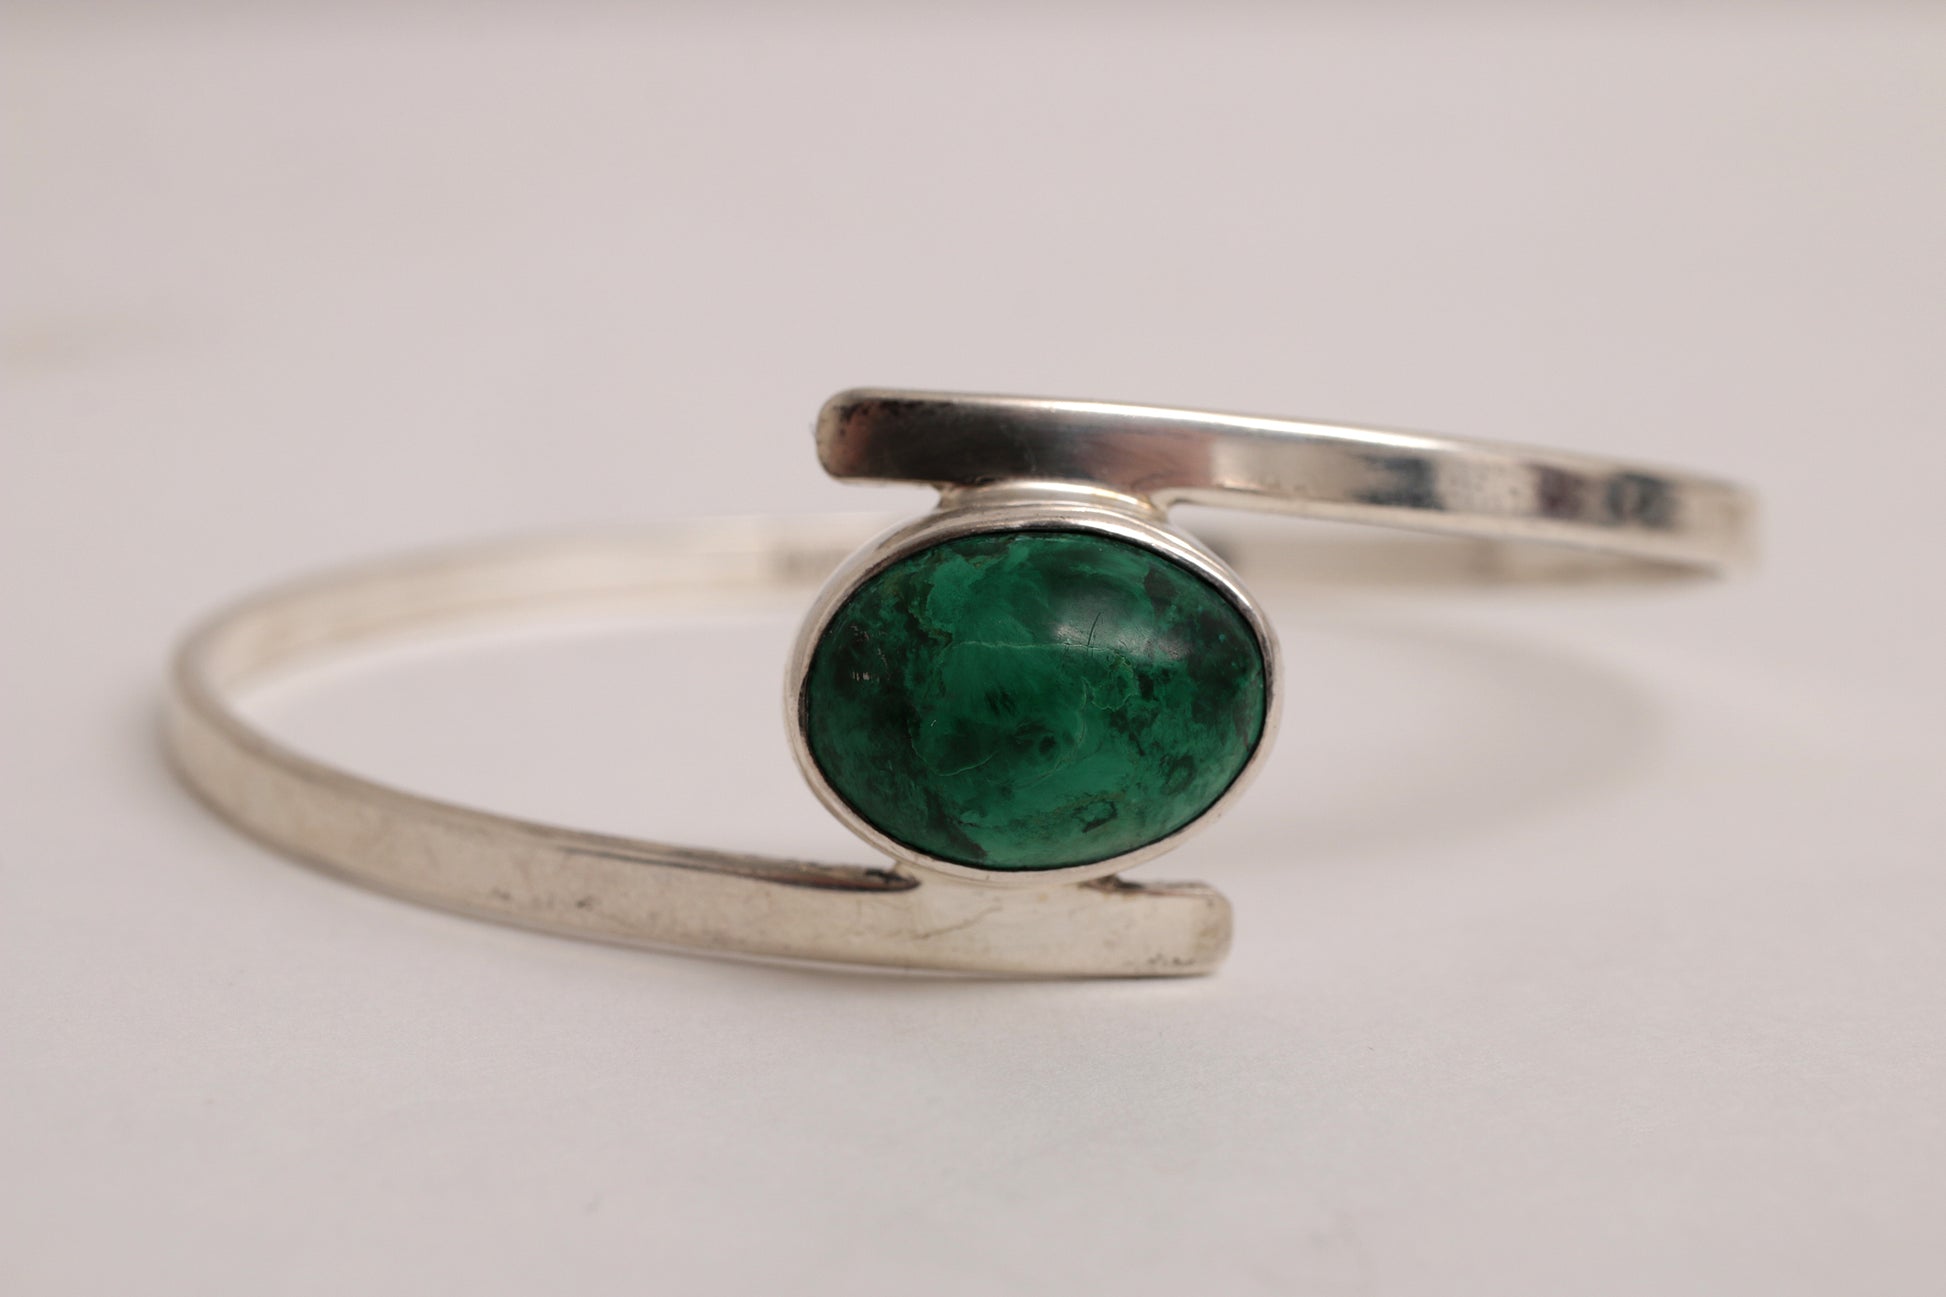 Mooi slanke armband met prachtige groene steen.